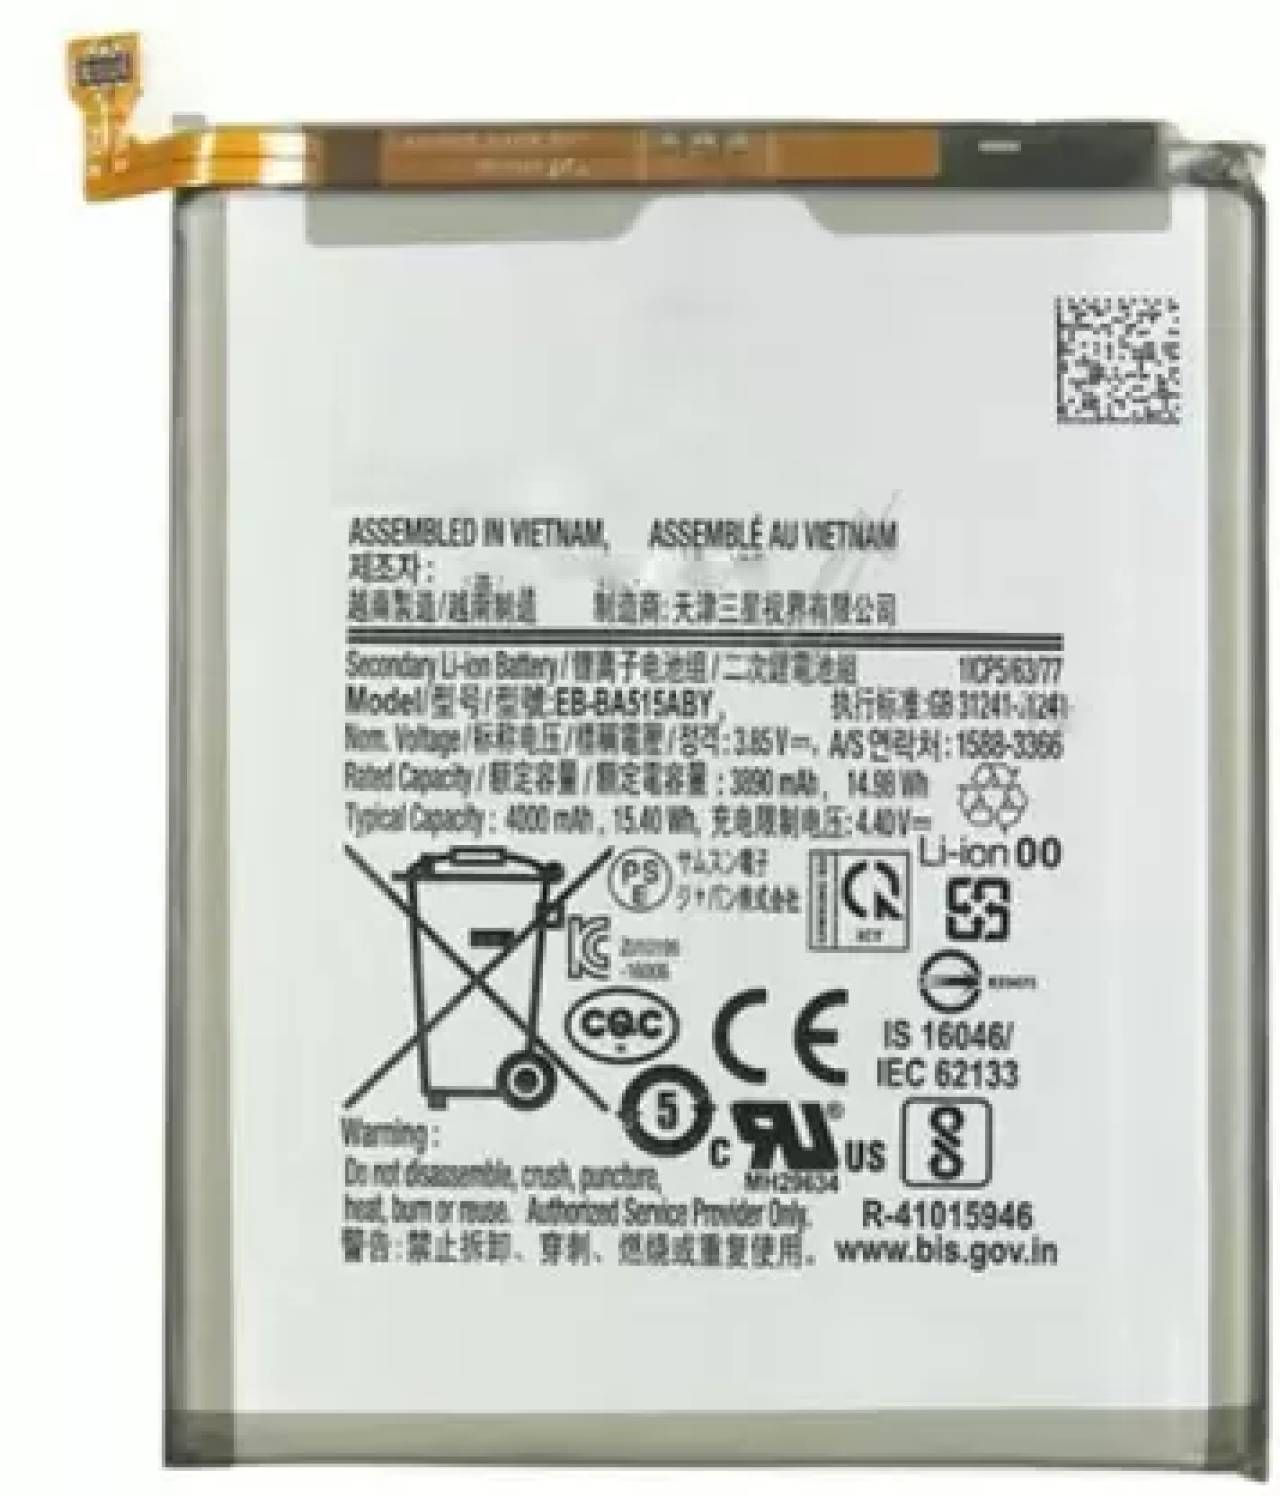 Acumulator, baterie Samsung Galaxy A51 A515 EB-BA515ABY EB-BA515